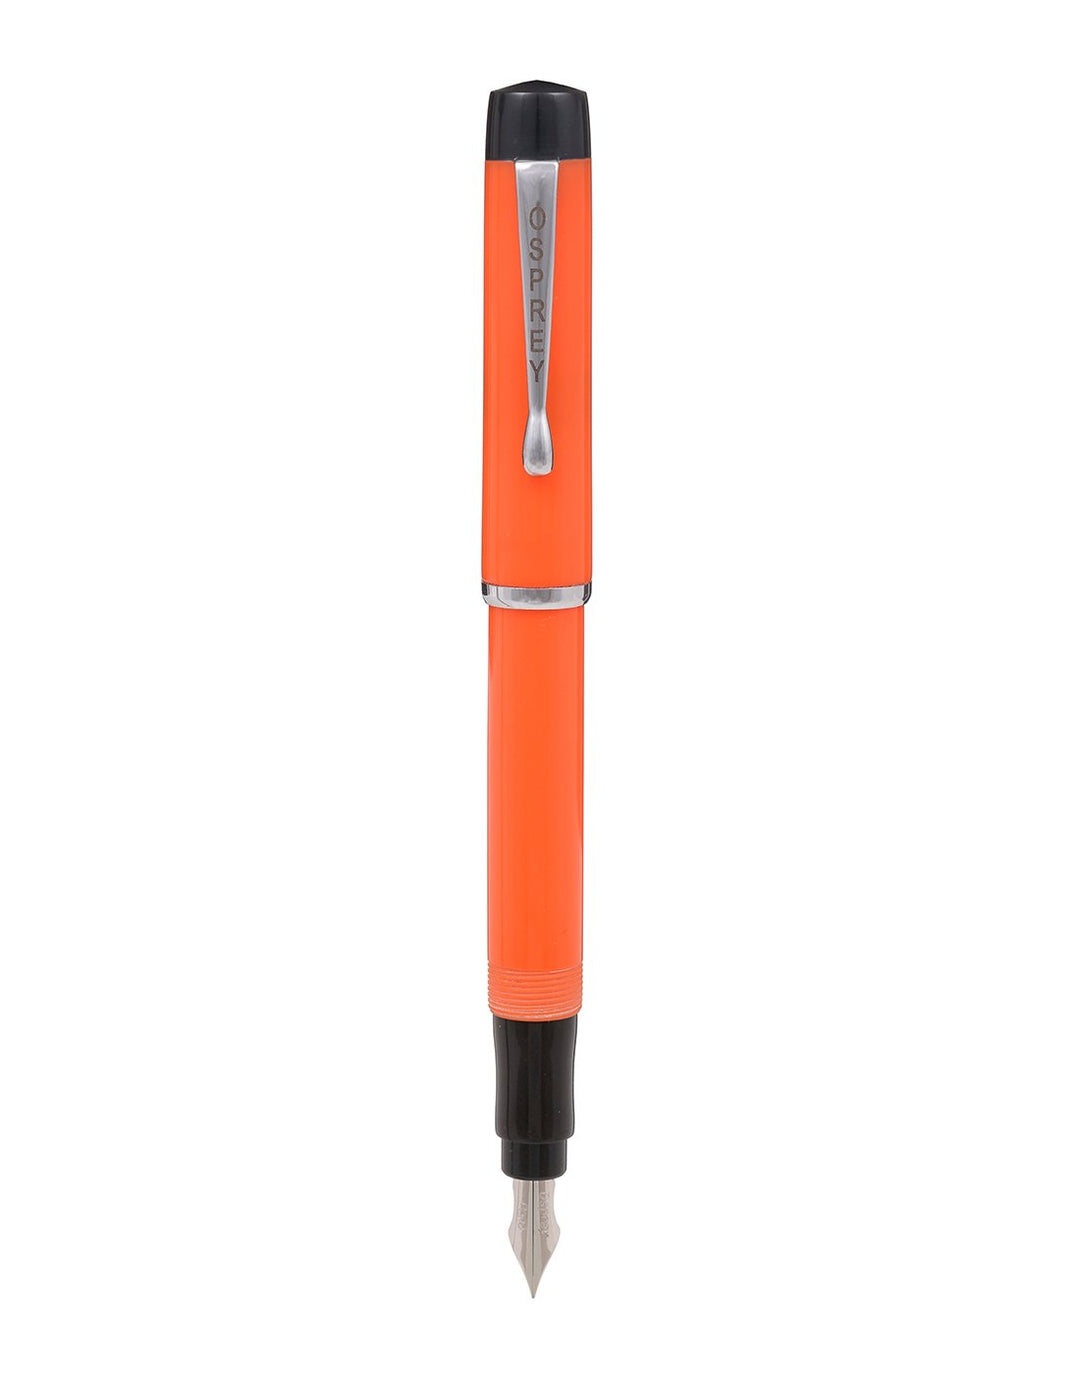 OSPREY PENS - SCHOLAR Fountain Pen "Duofold Orange" With Standard And Flex Nib Options - Buchan's Kerrisdale Stationery